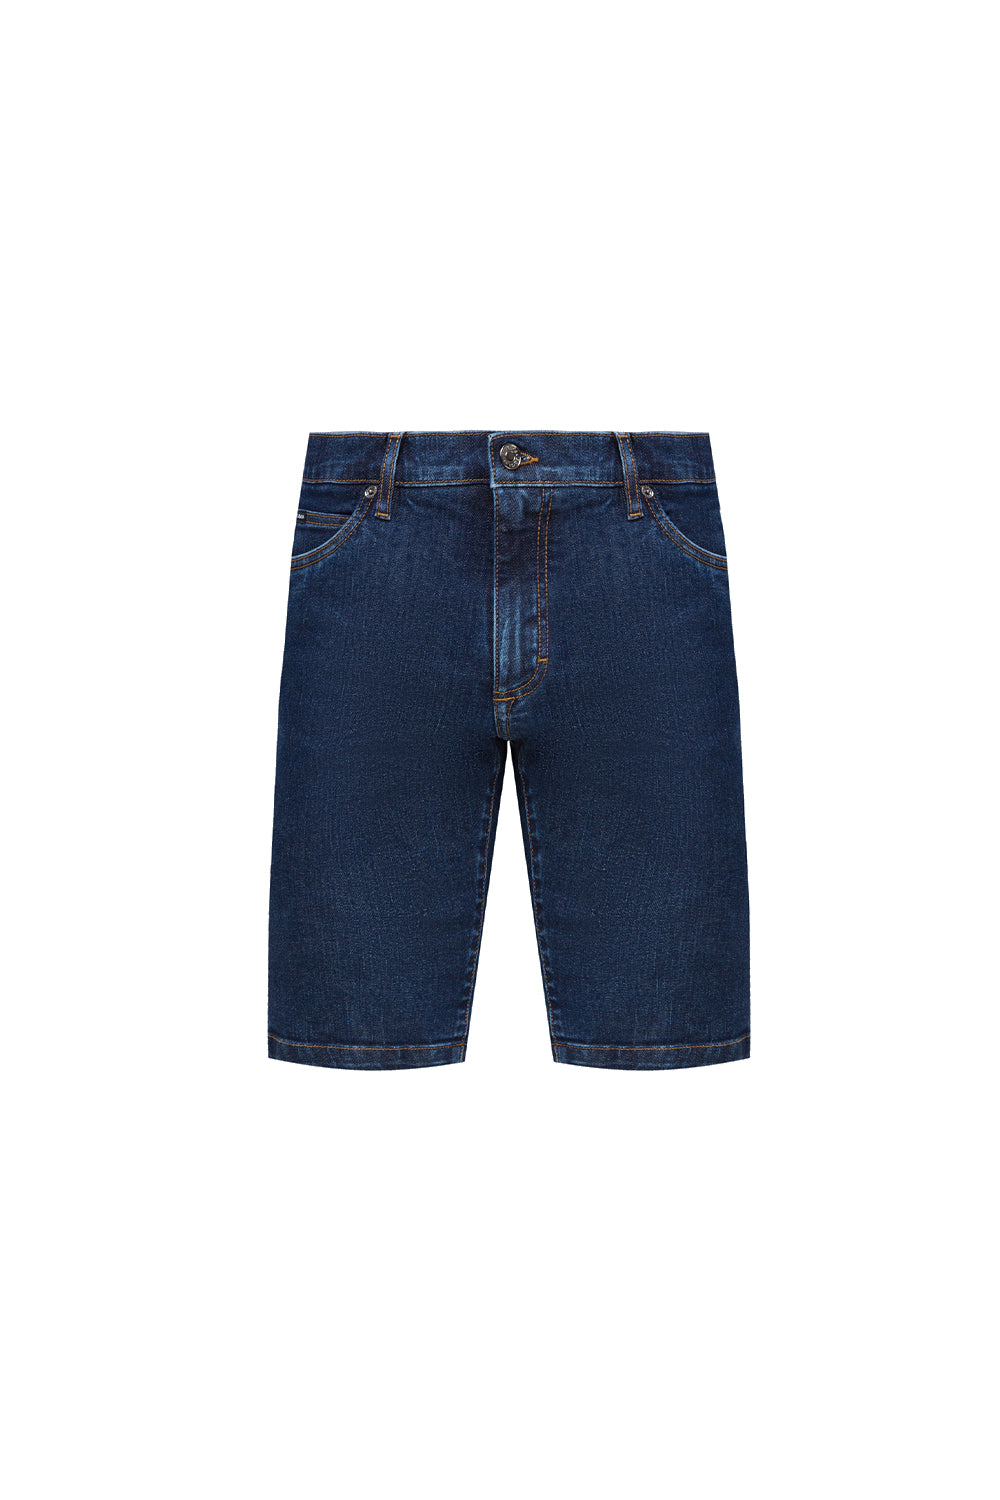 Dolce & Gabbana Blue short Jeans